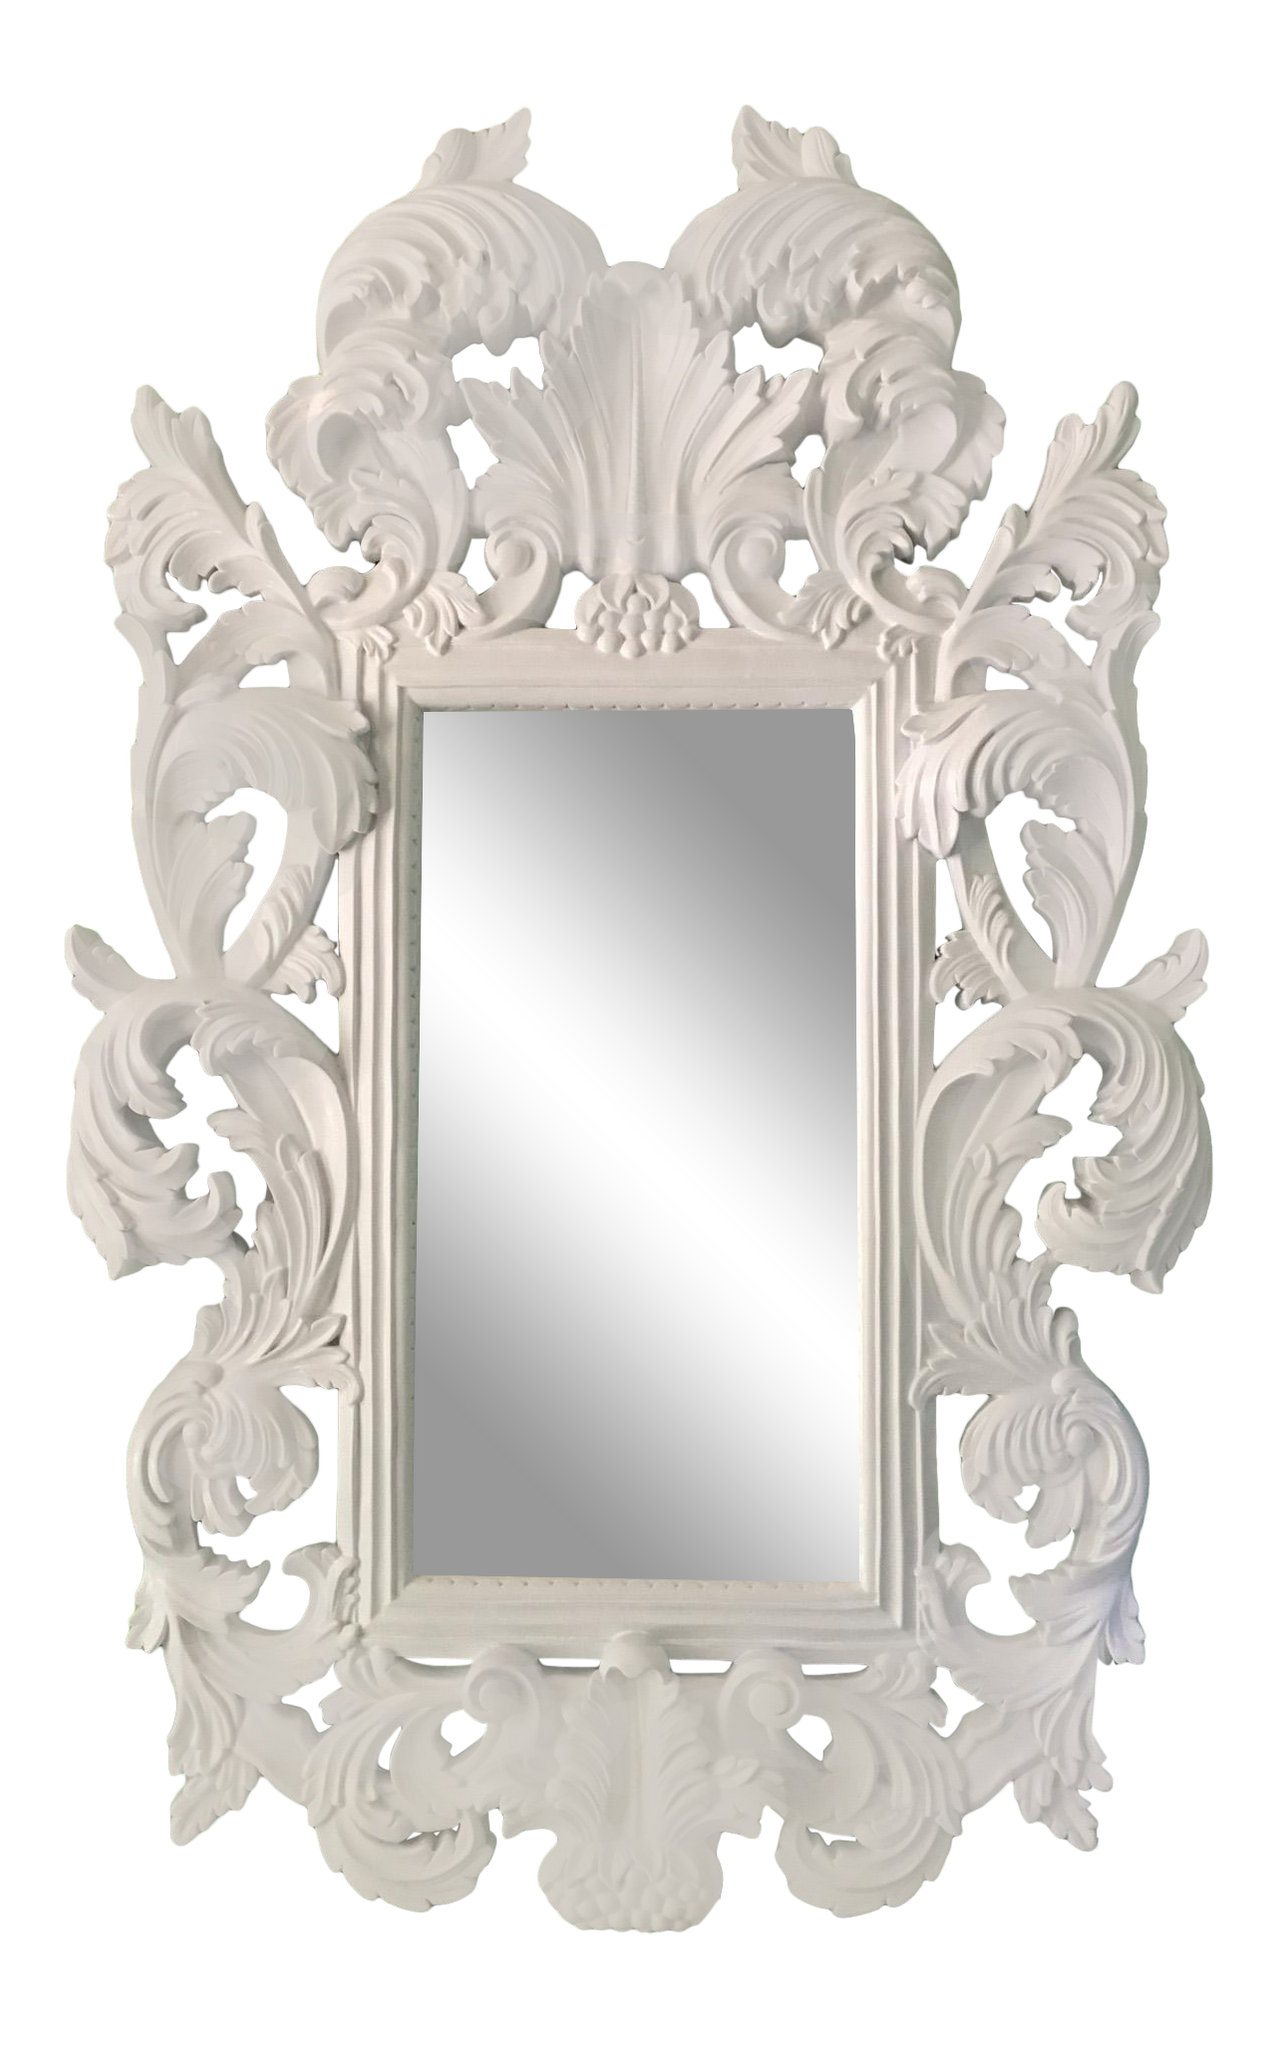 Large Baroque Framed Mirror in the Manner of Dorothy Draper